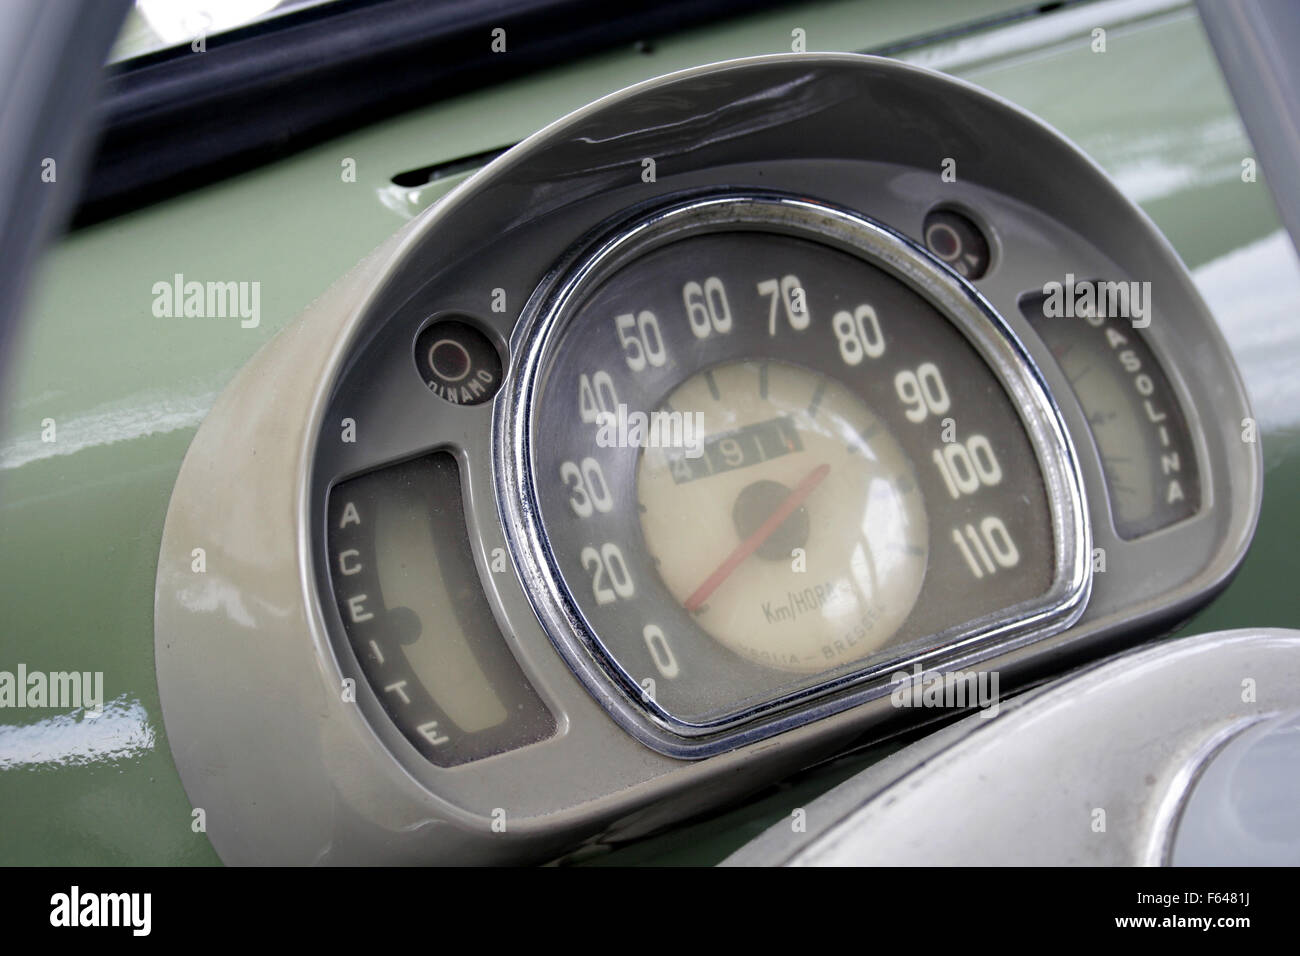 Seat 600, made in Spain under Fiat license. Tachometer. Speedometer. Stock Photo